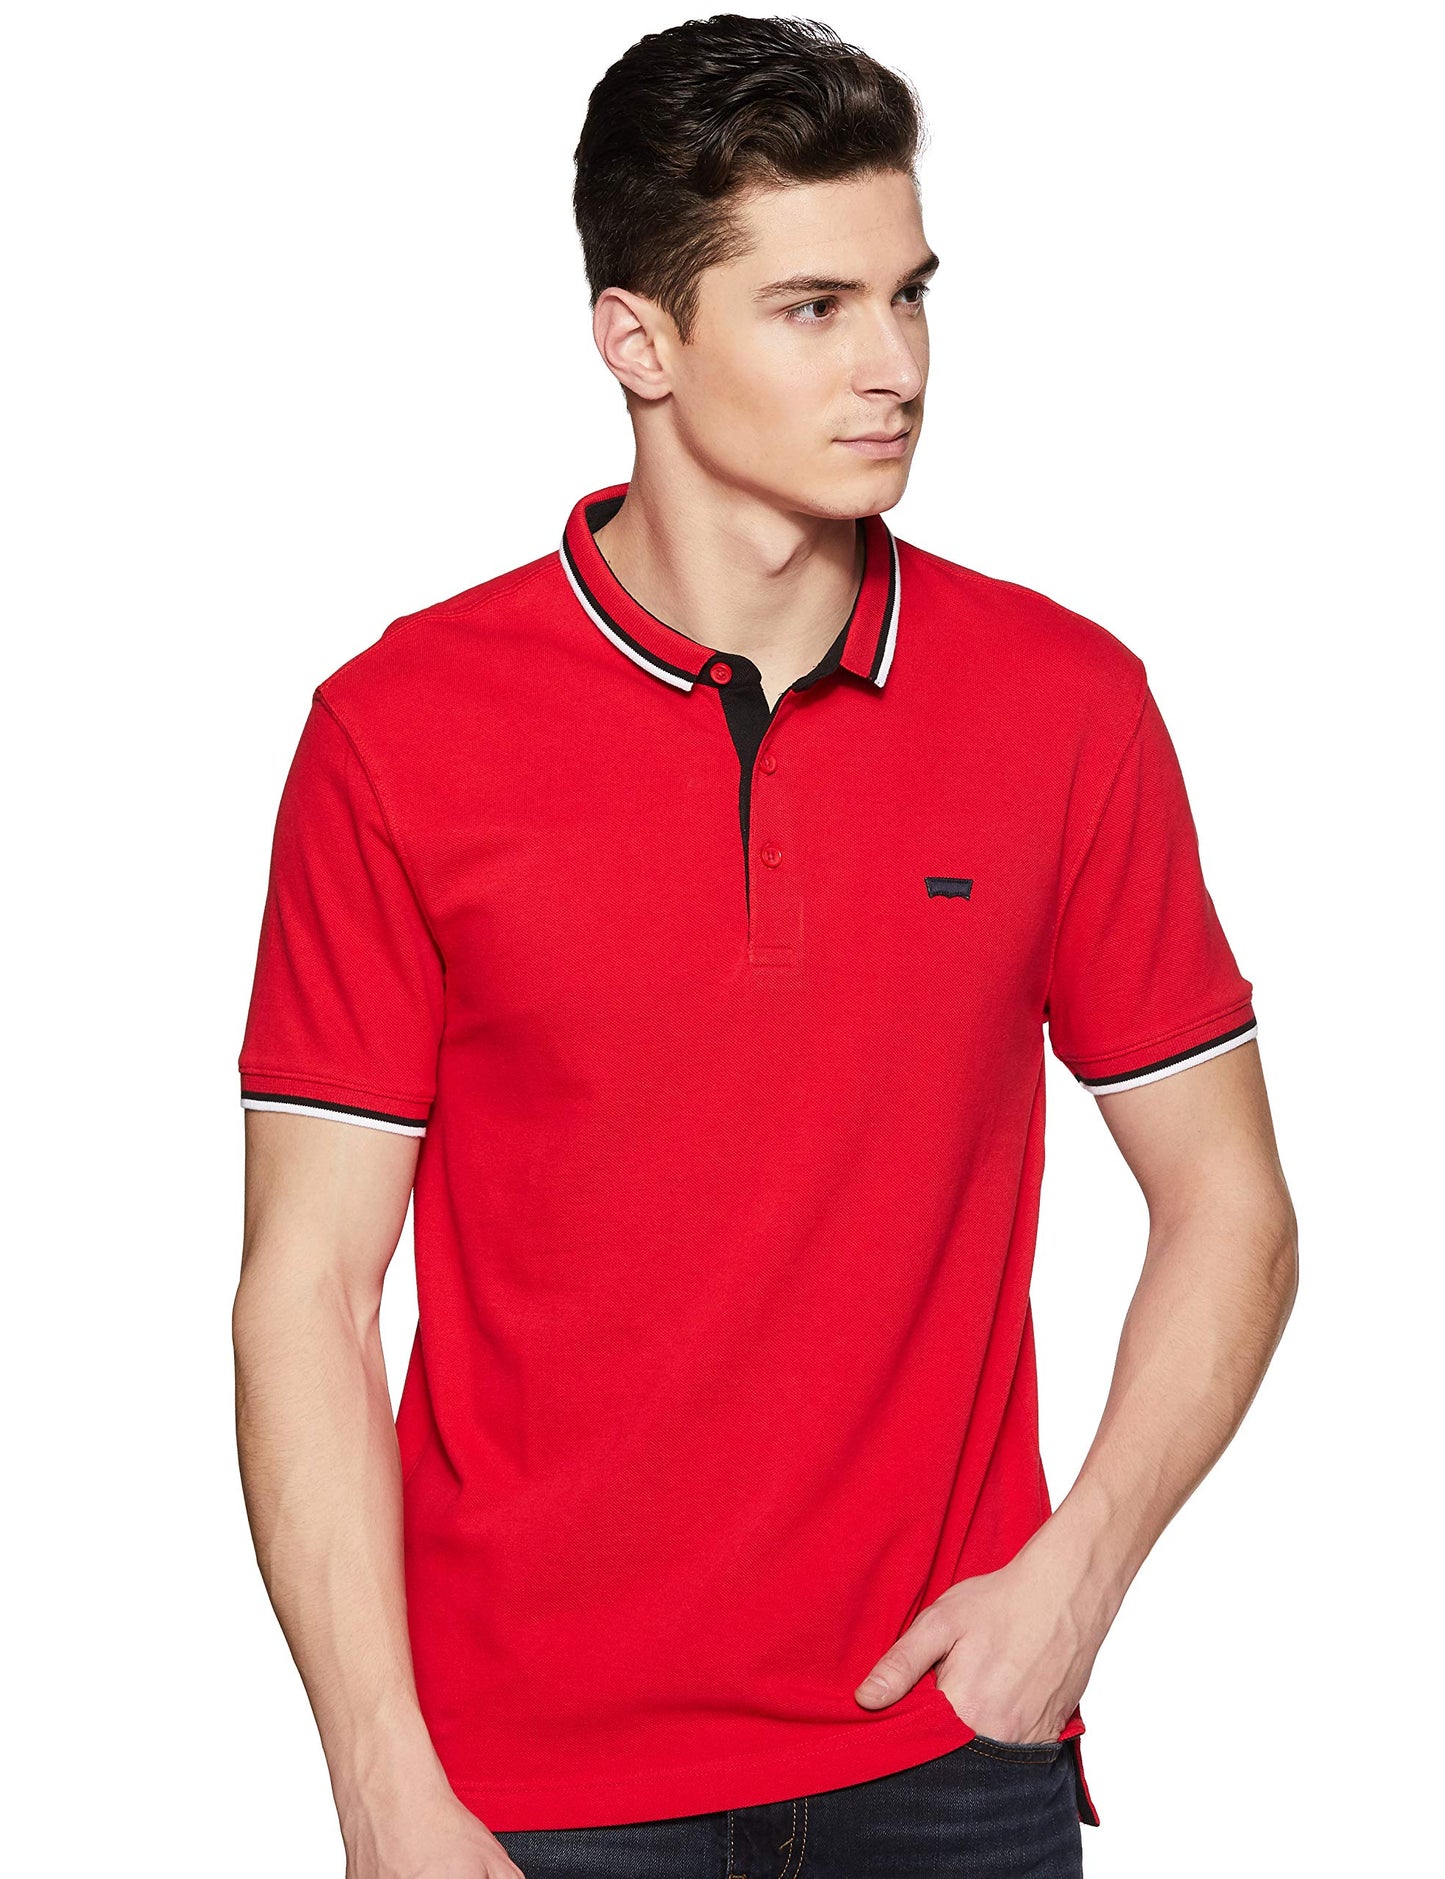 Levis Men Solid Regular fit T-Shirt(17080-0070_Red_S)